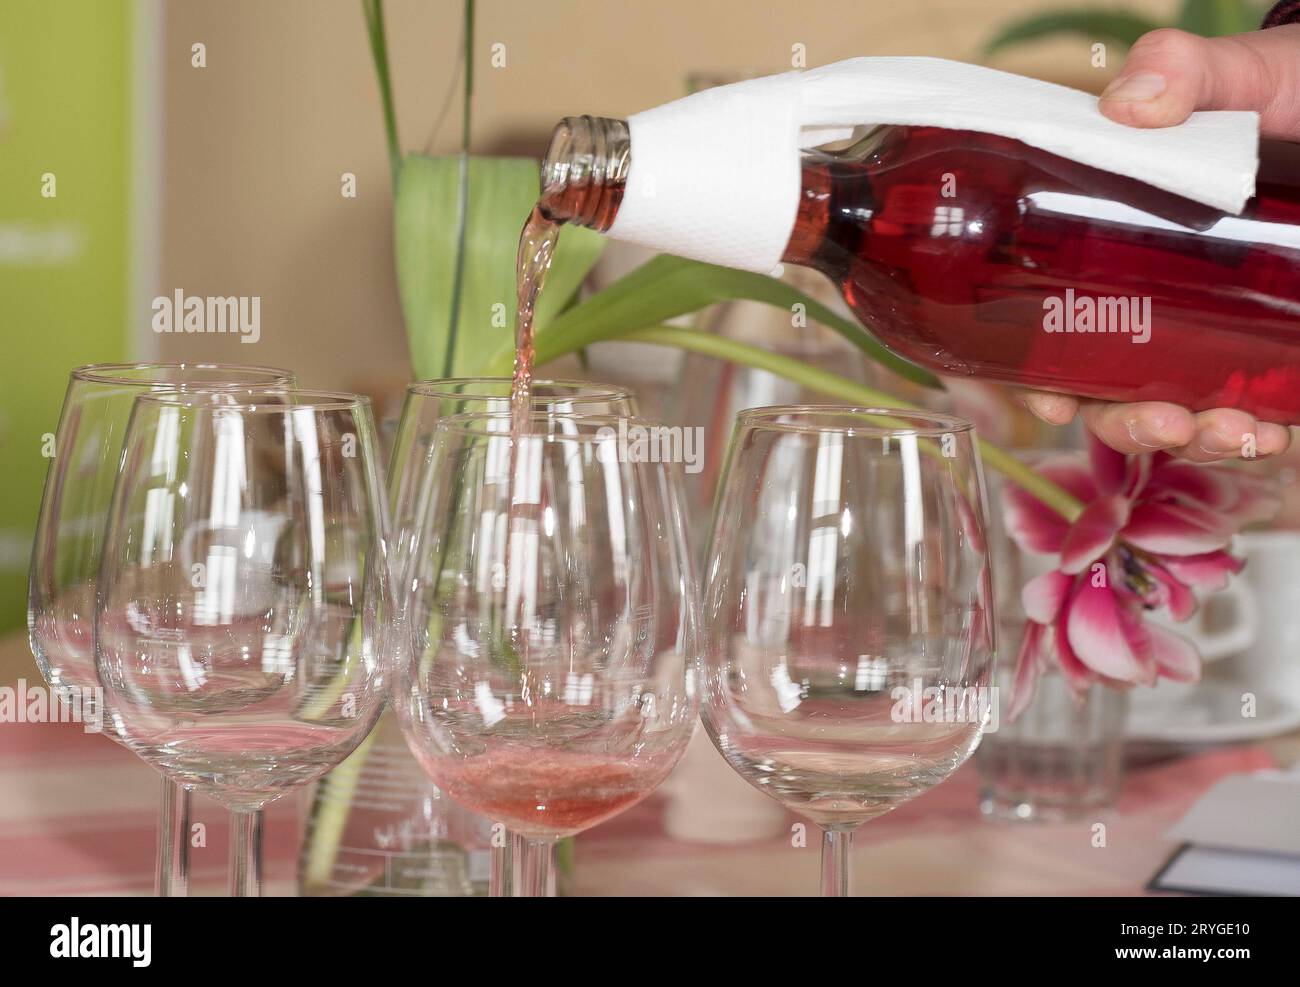 A glass of Schilcher wine Stock Photo